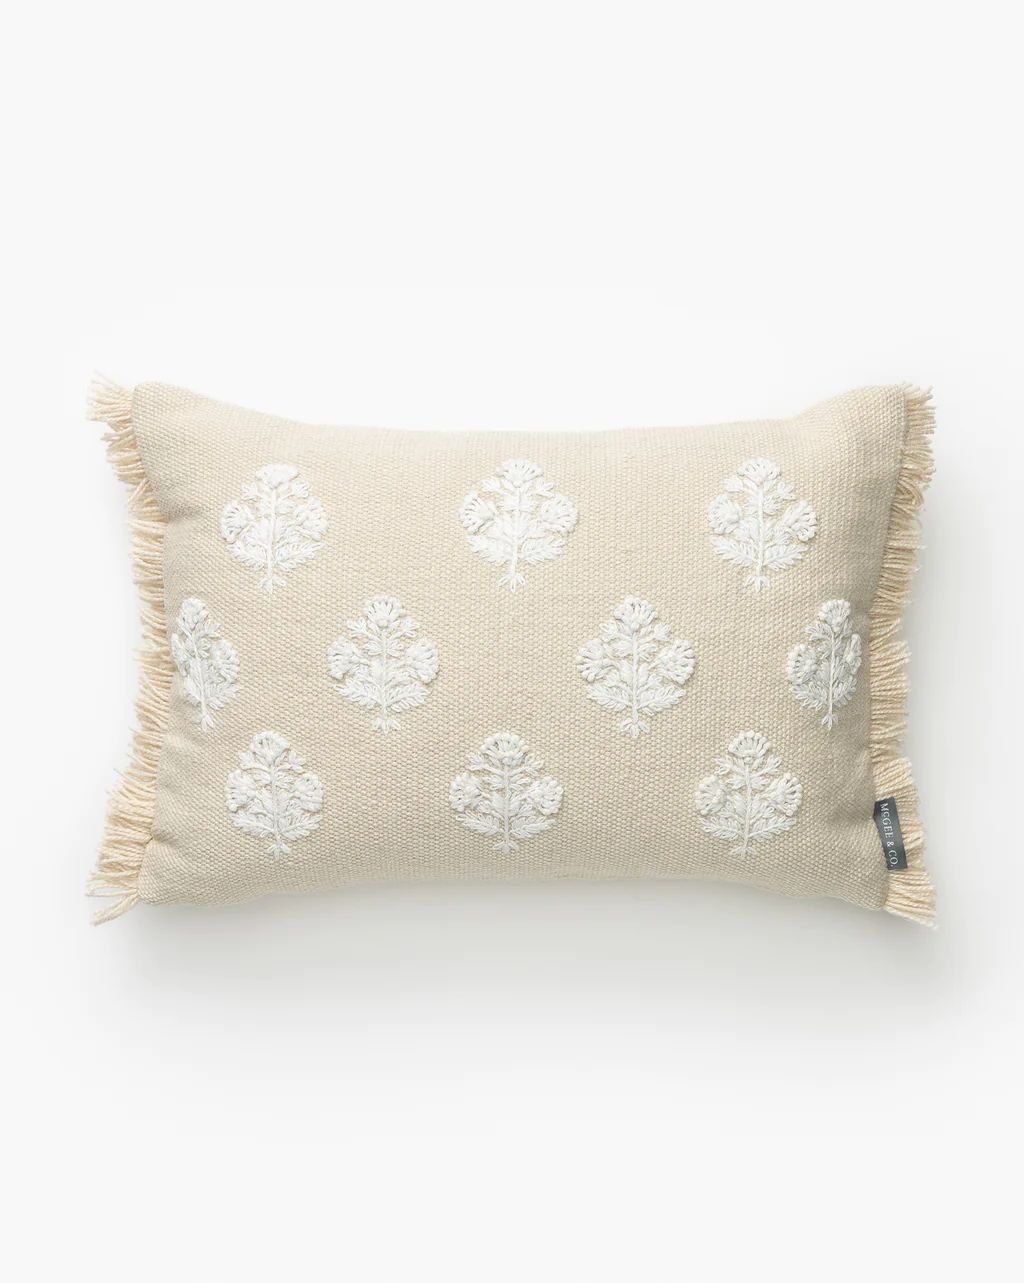 Carina Indoor/Outdoor Pillow | McGee & Co.